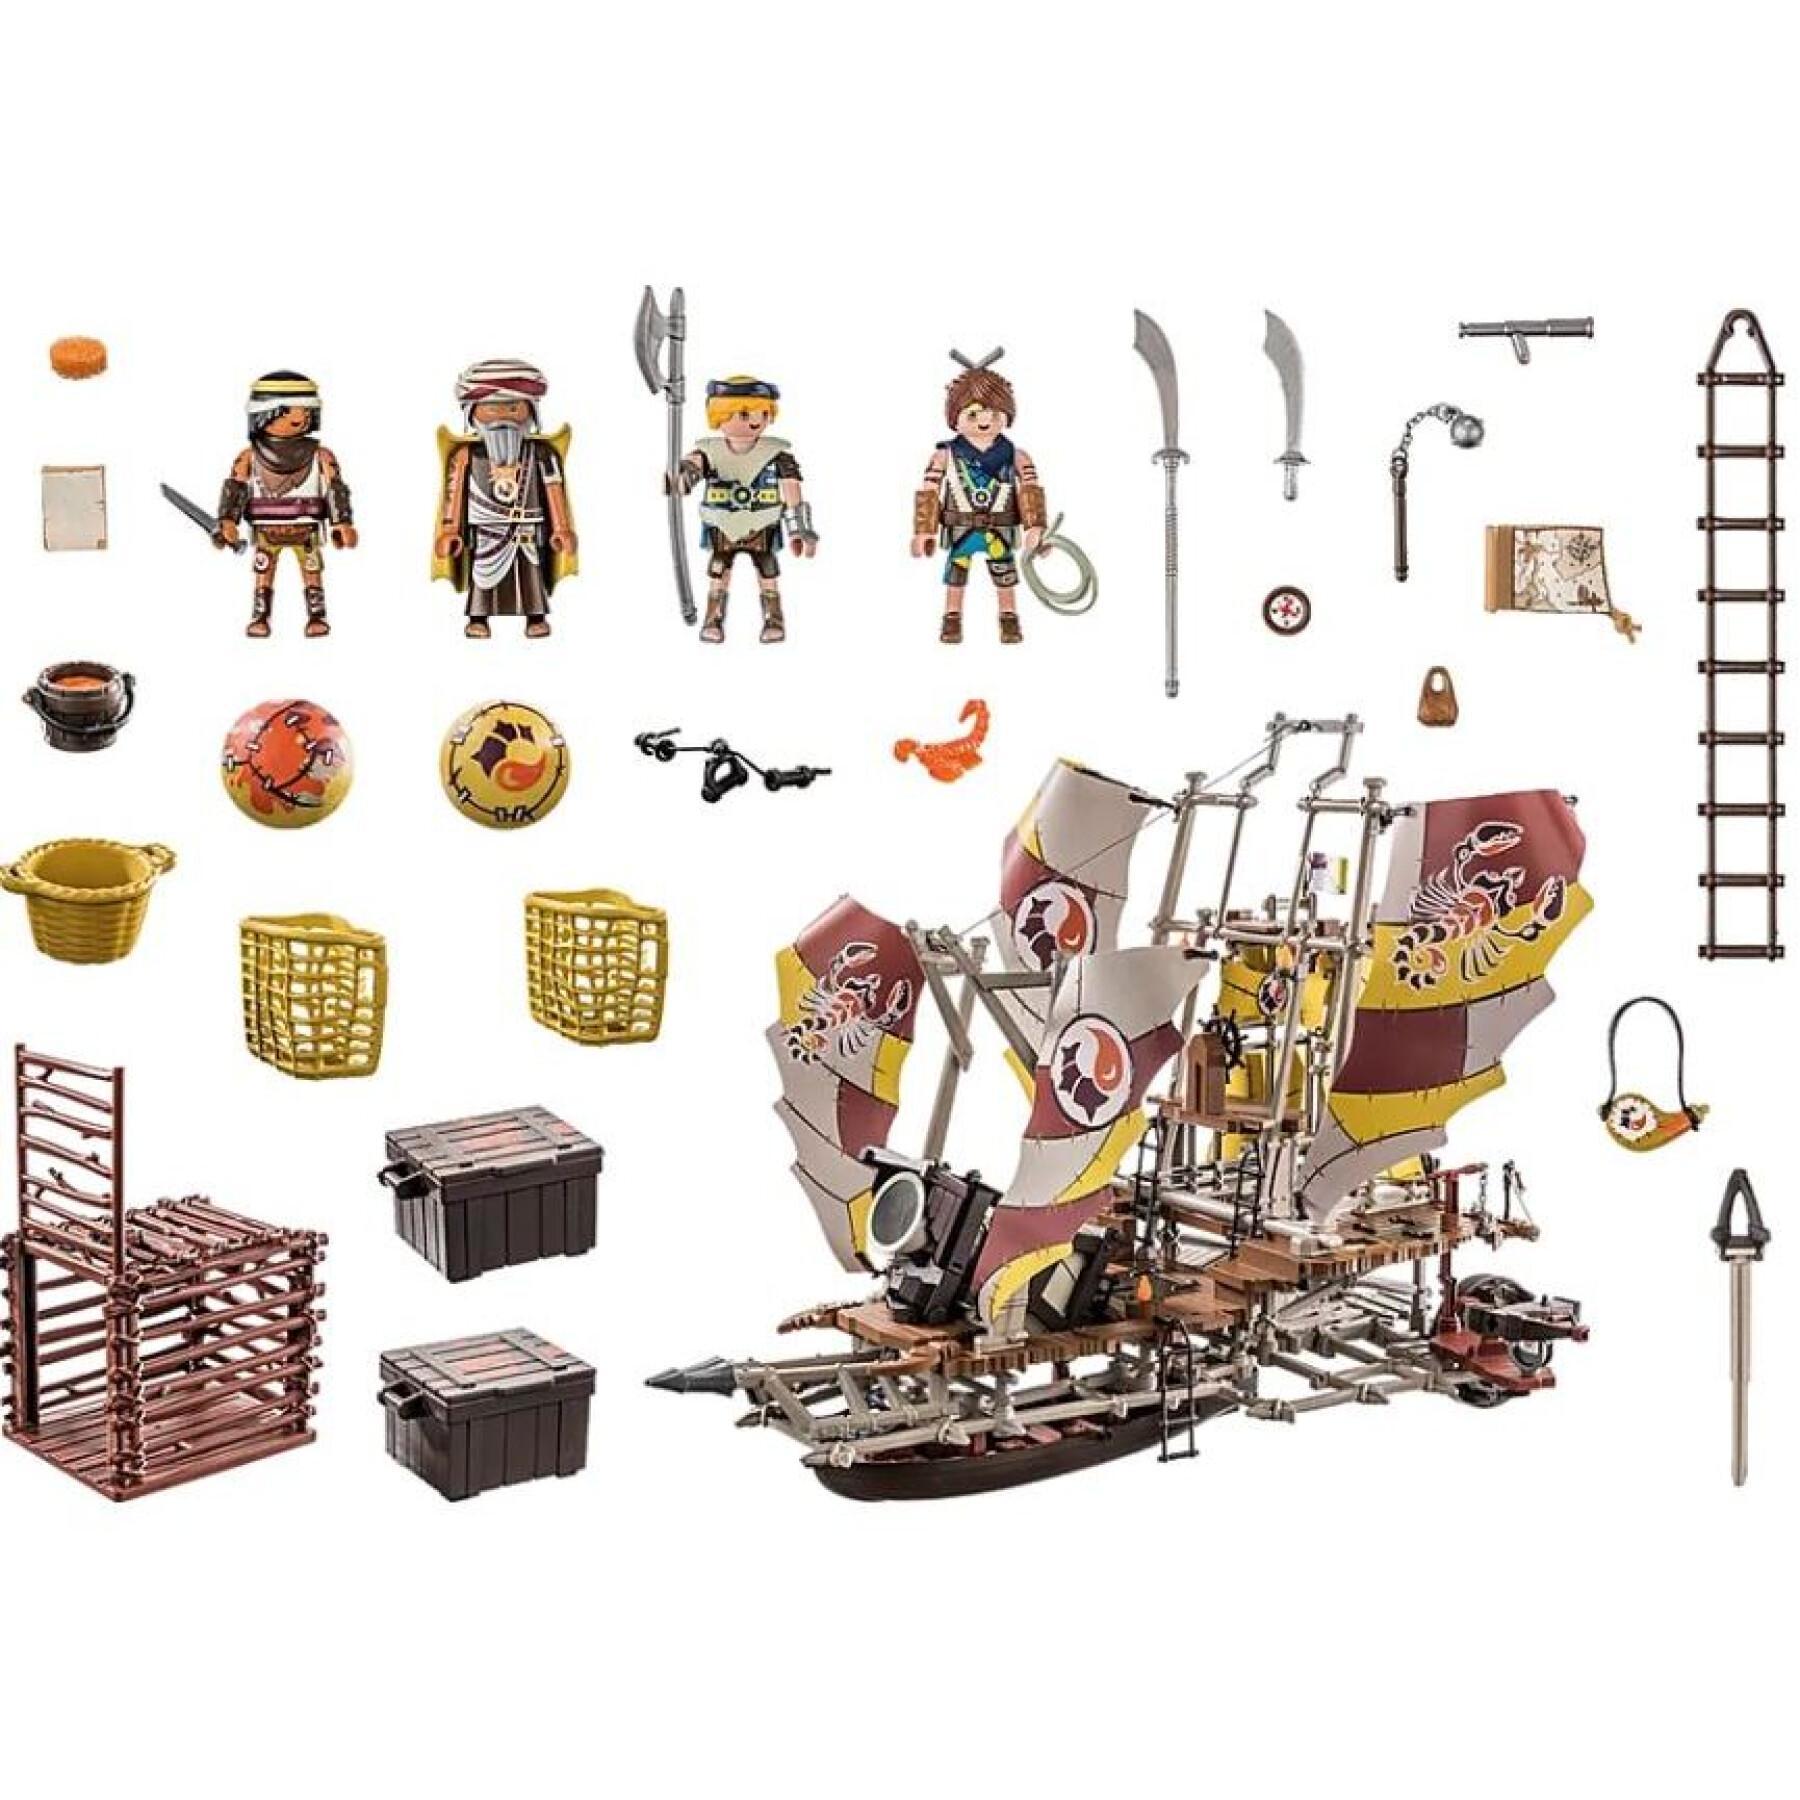 Building sets shipbleslahari Playmobil Novelm